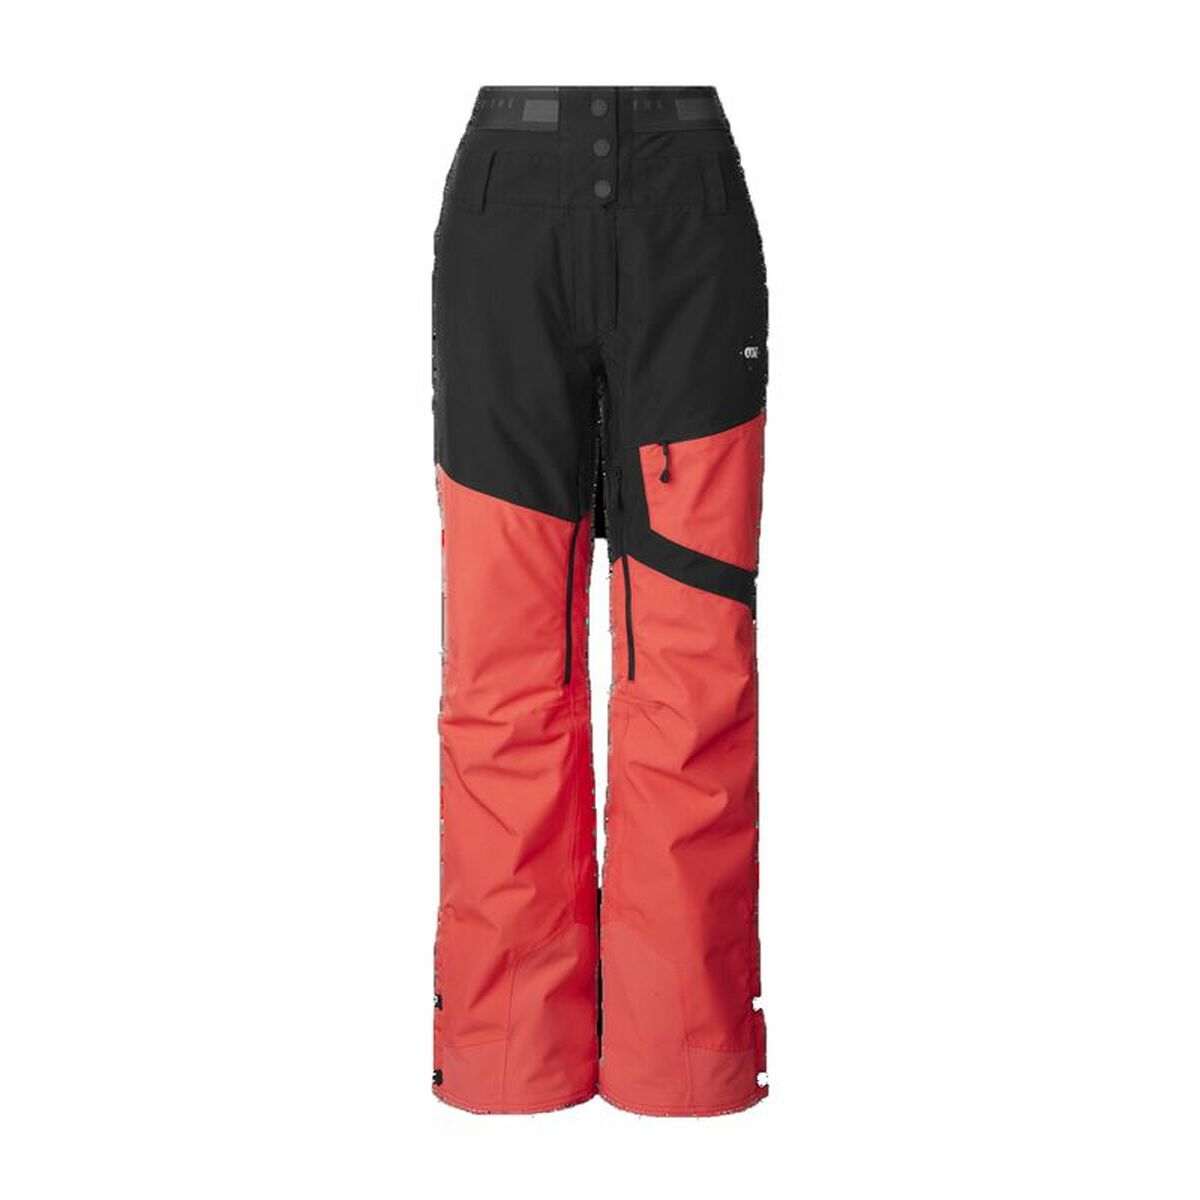 Pantaloni de ski Picture Seen Negru Coral - Mărime S